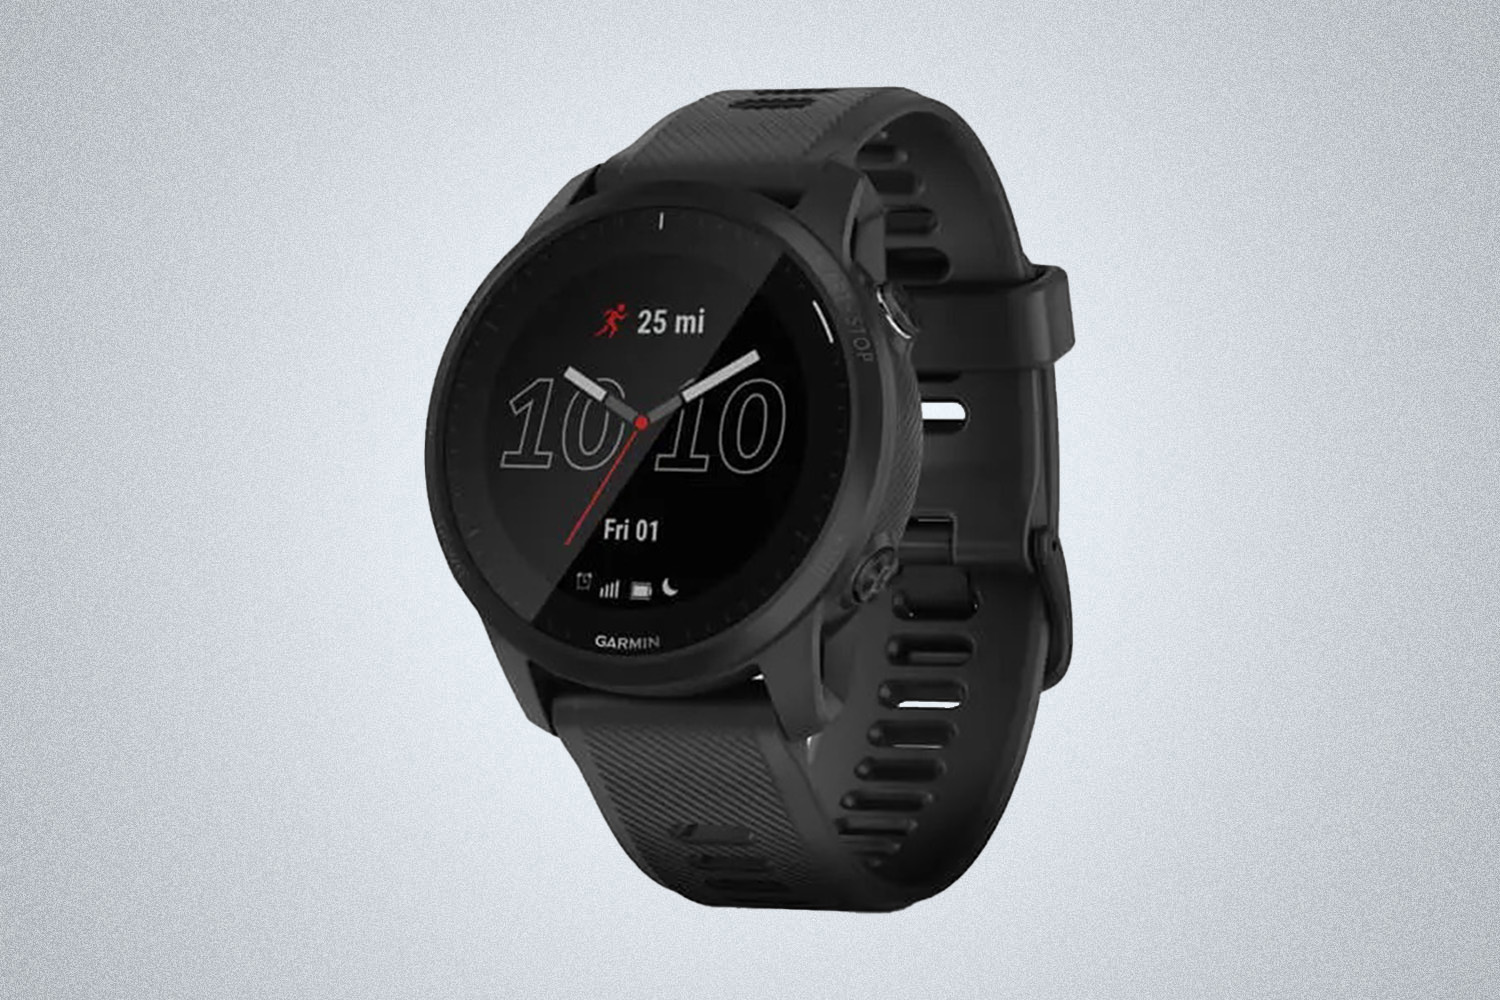 a Garmin smartwatch device on a grey background